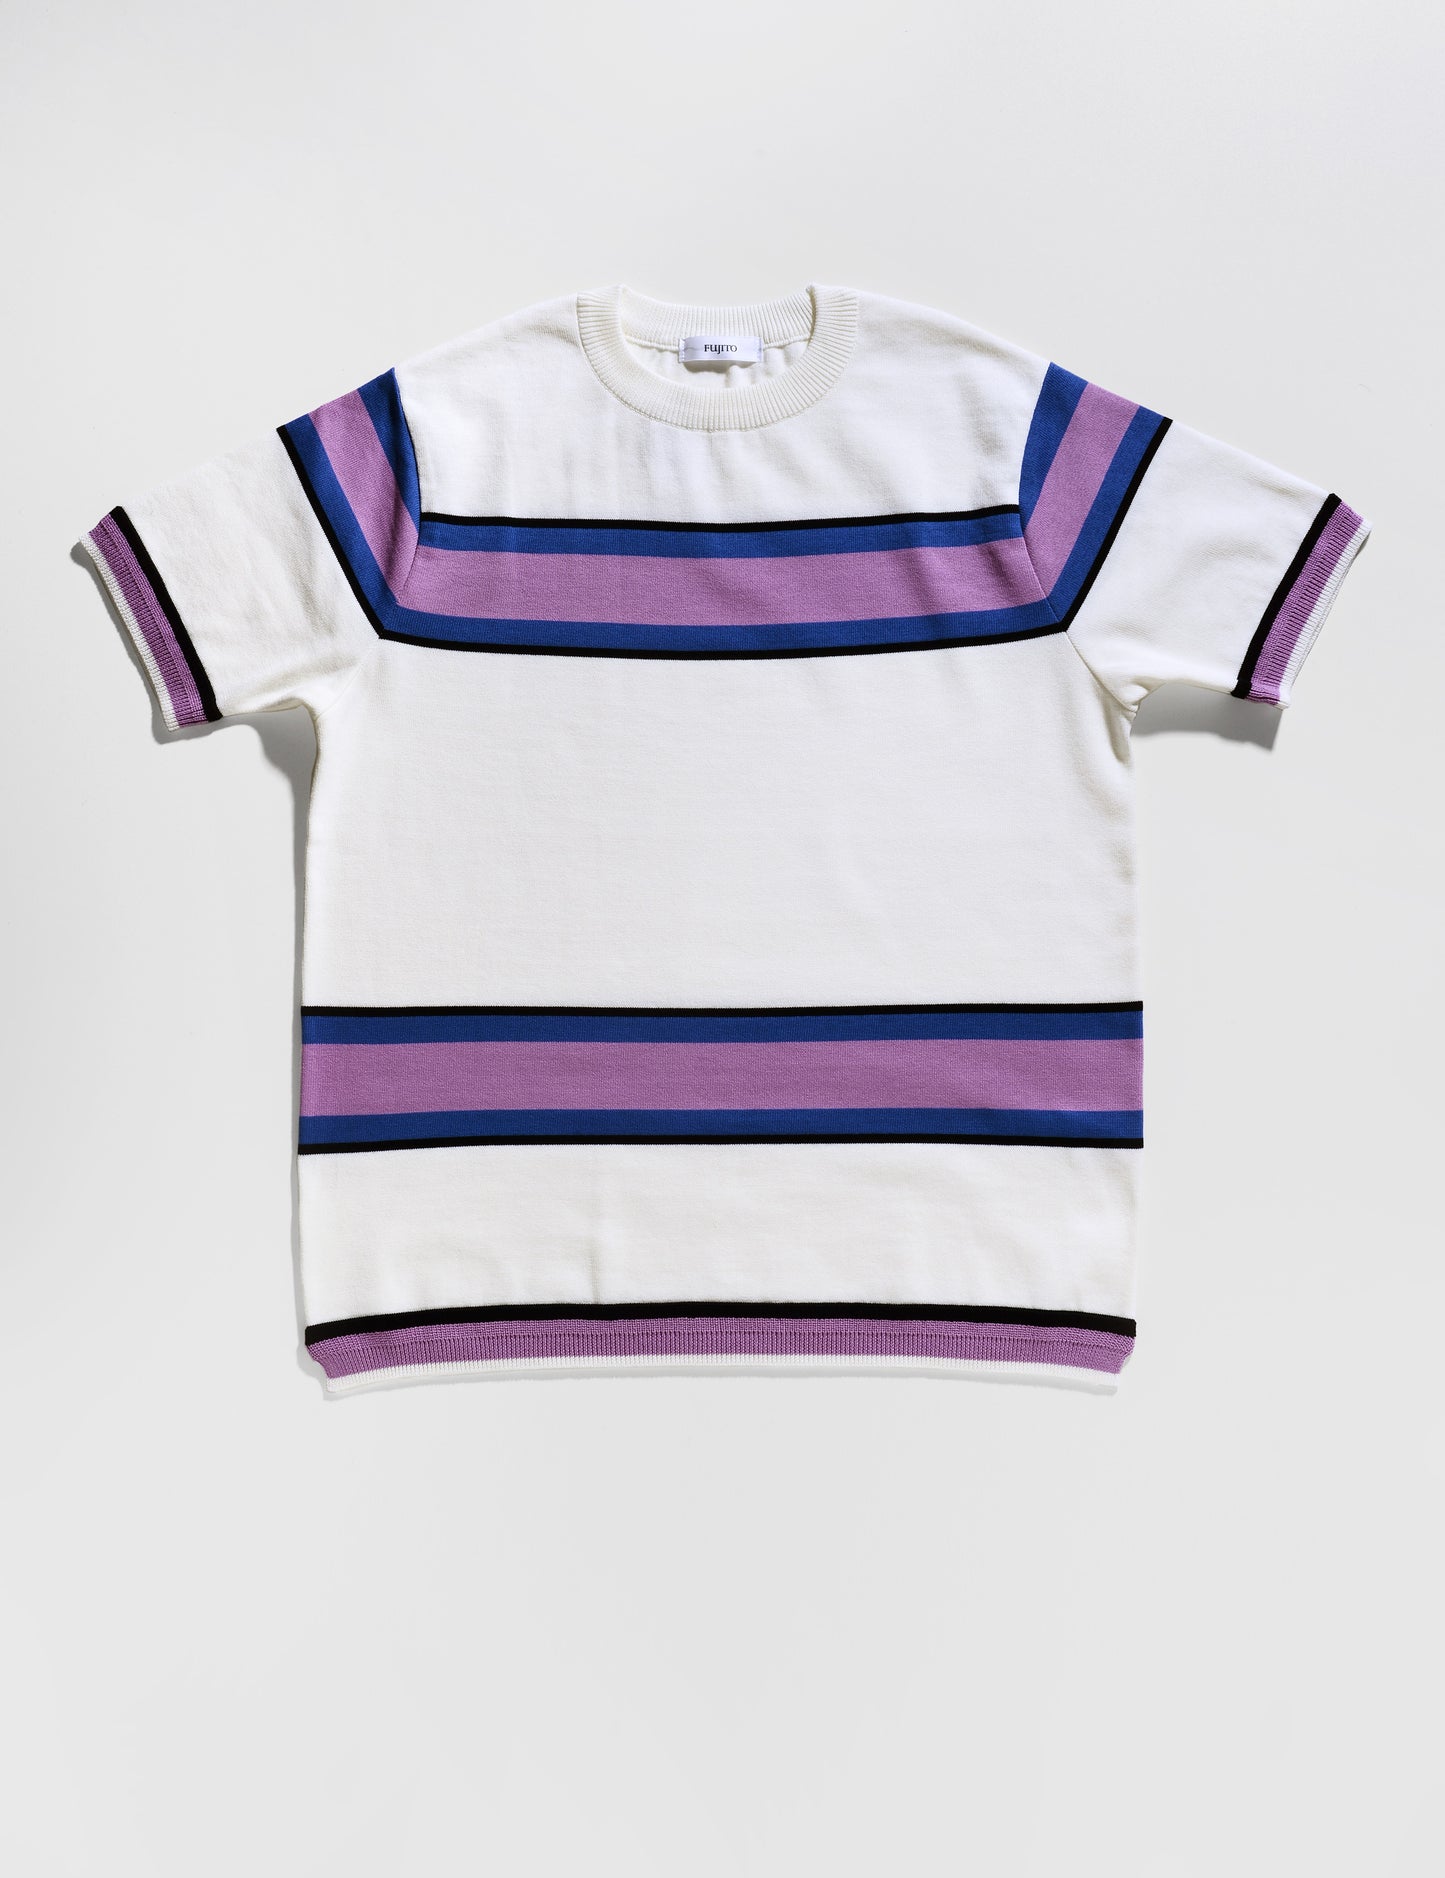 Flat shot of Fujito Knit Shirt in White and Purple Stripe